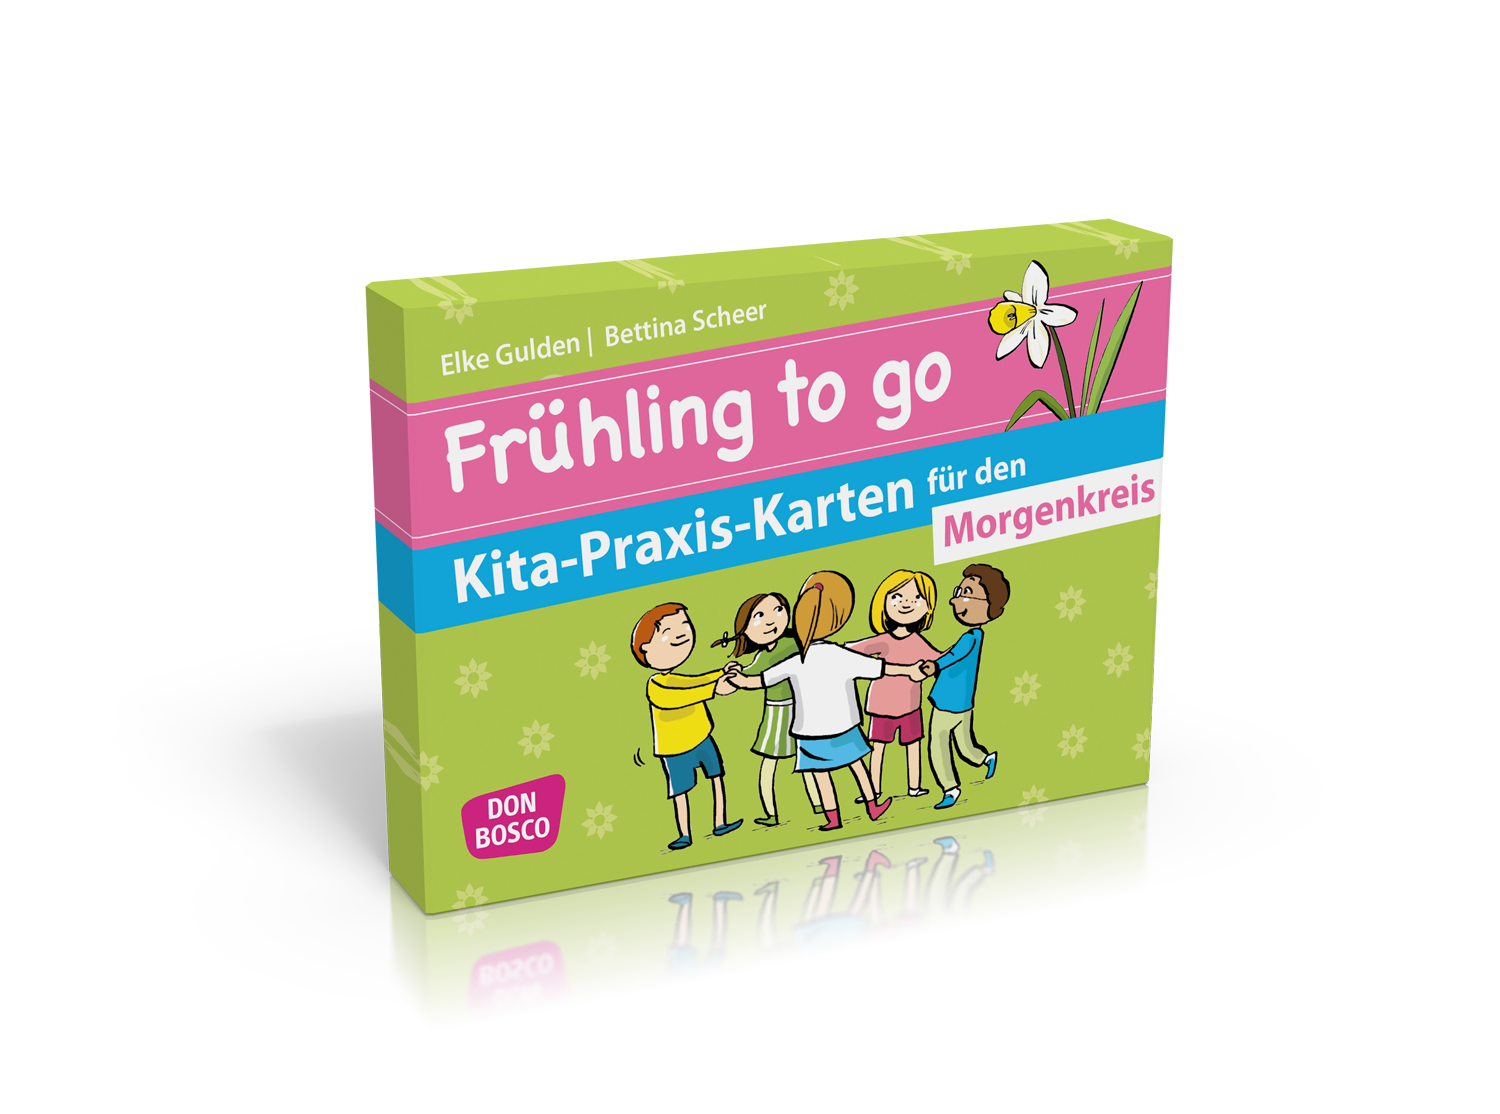 Frühling to go Kita-Praxis-Karten für den Morgenkreis